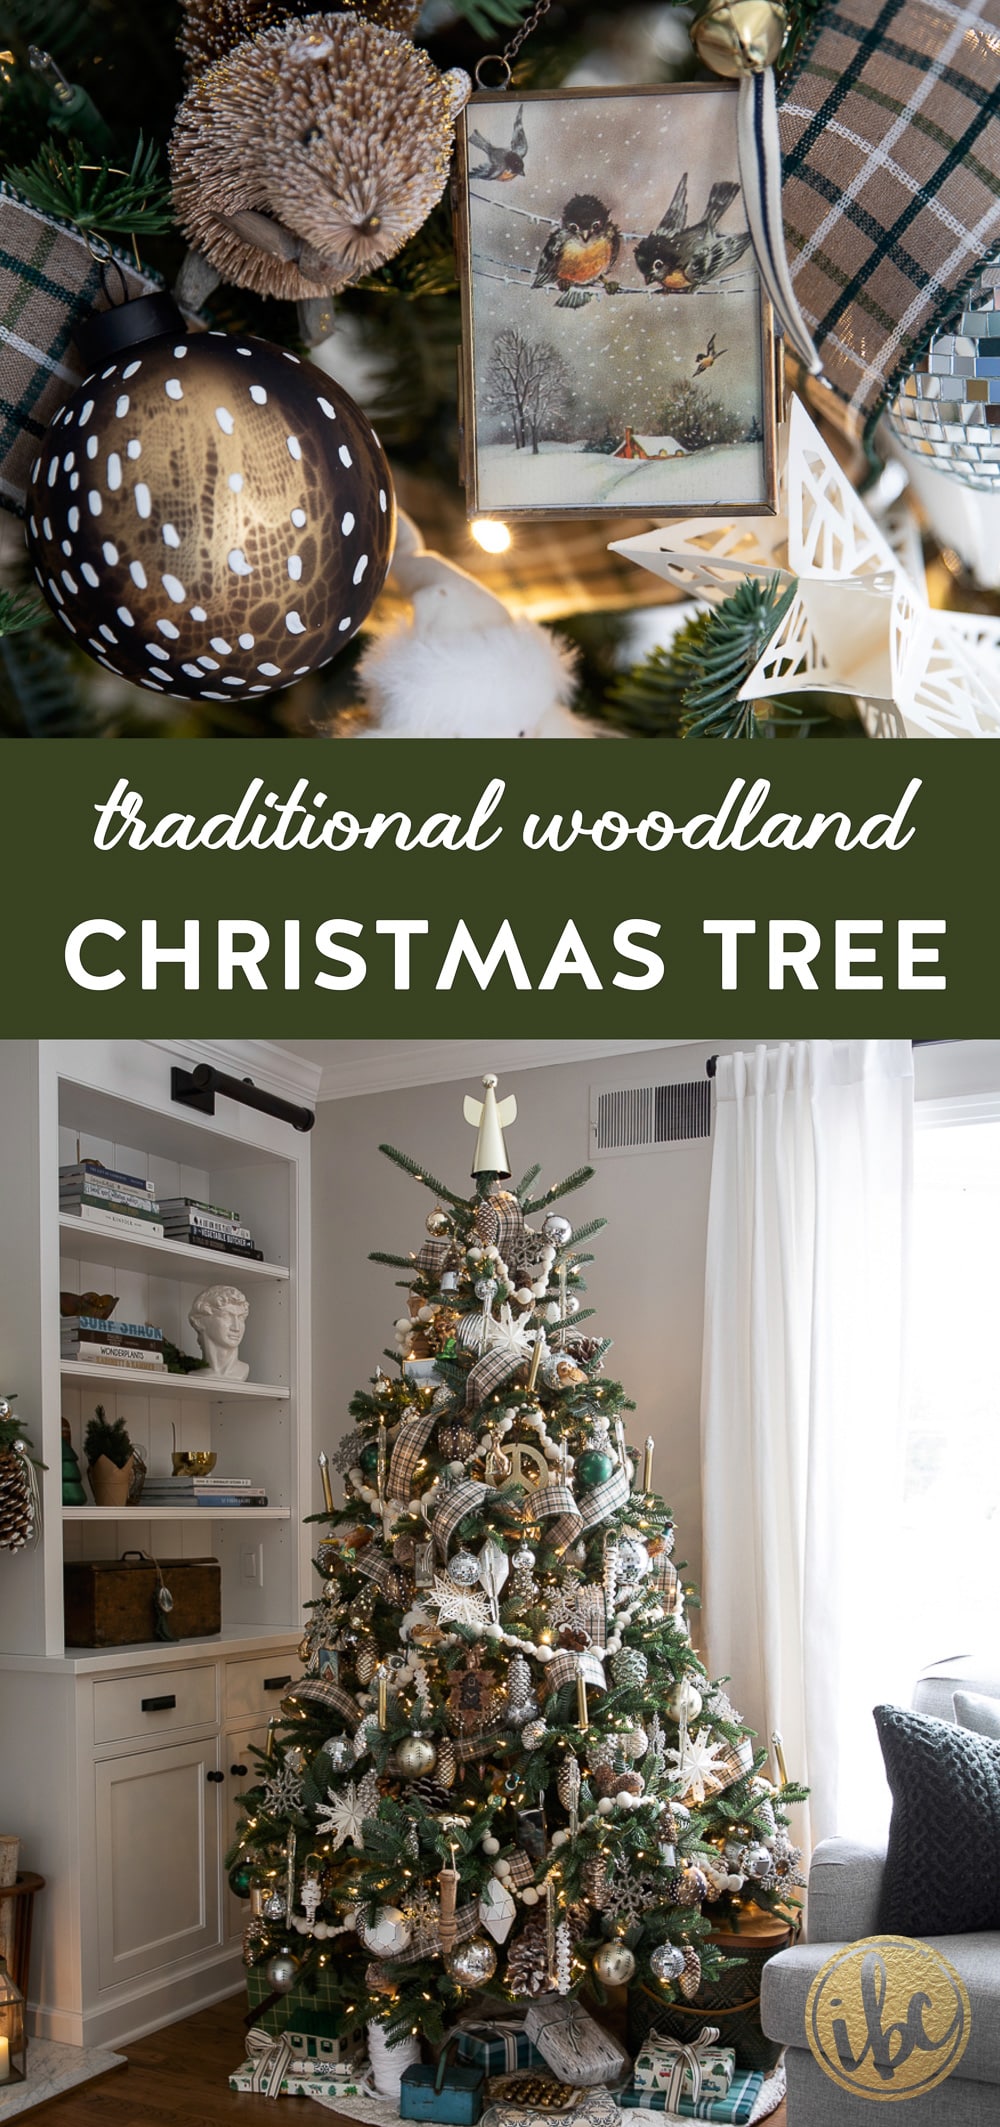 Traditional Woodland Christmas Tree Decor Ideas